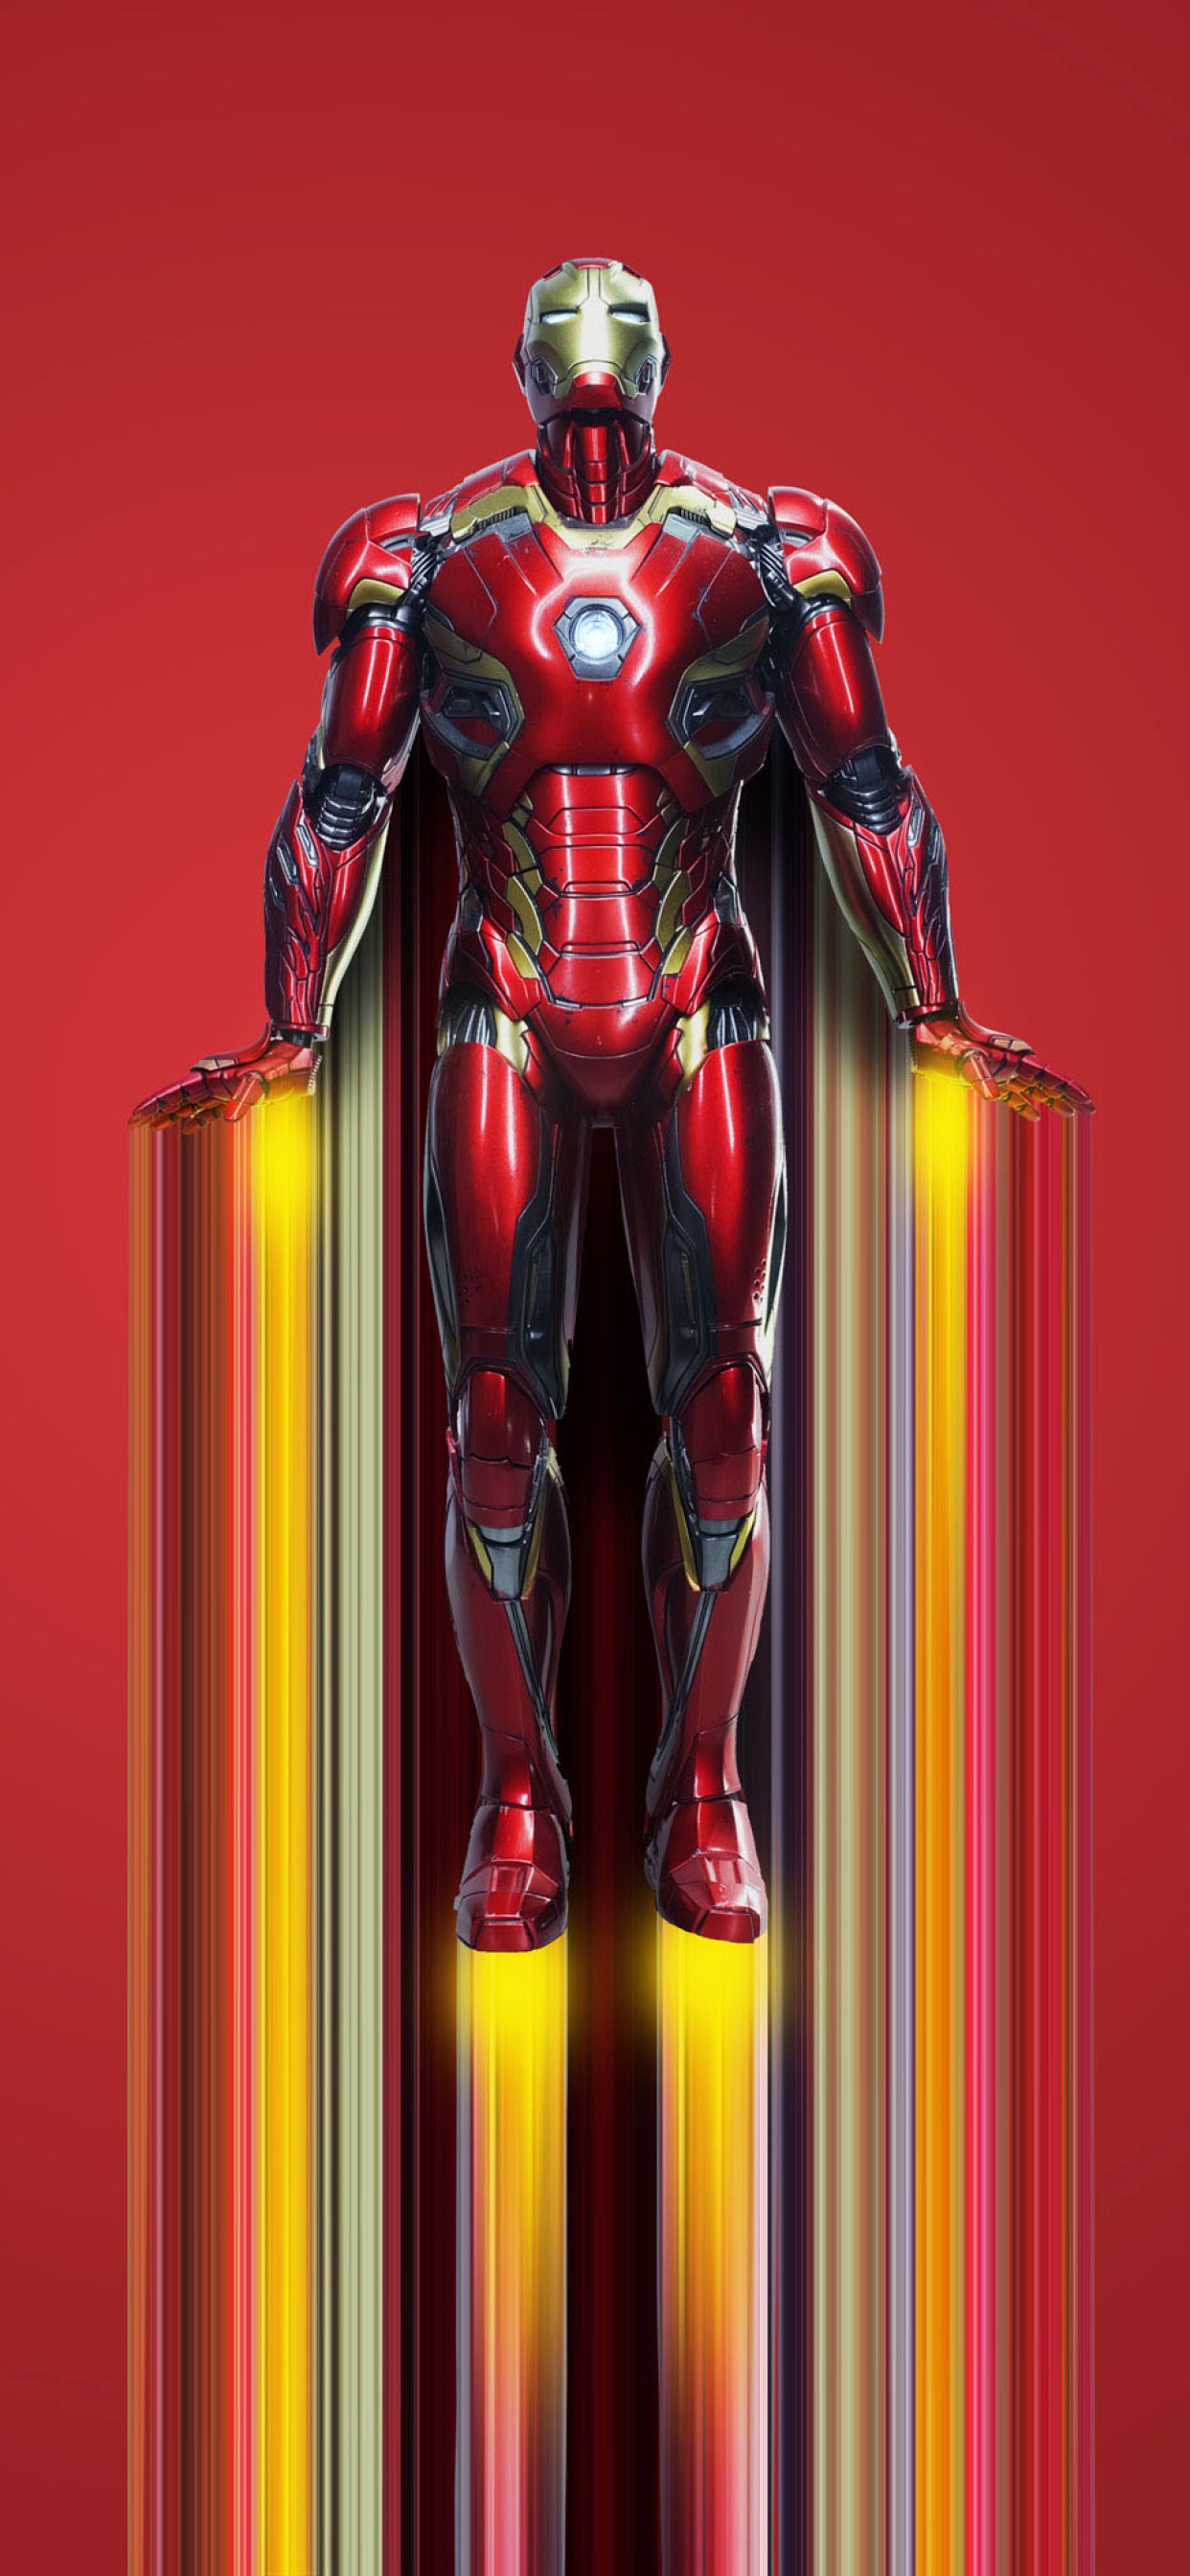 Iron Man Avengers Endgame Art iPhone XS MAX Wallpaper